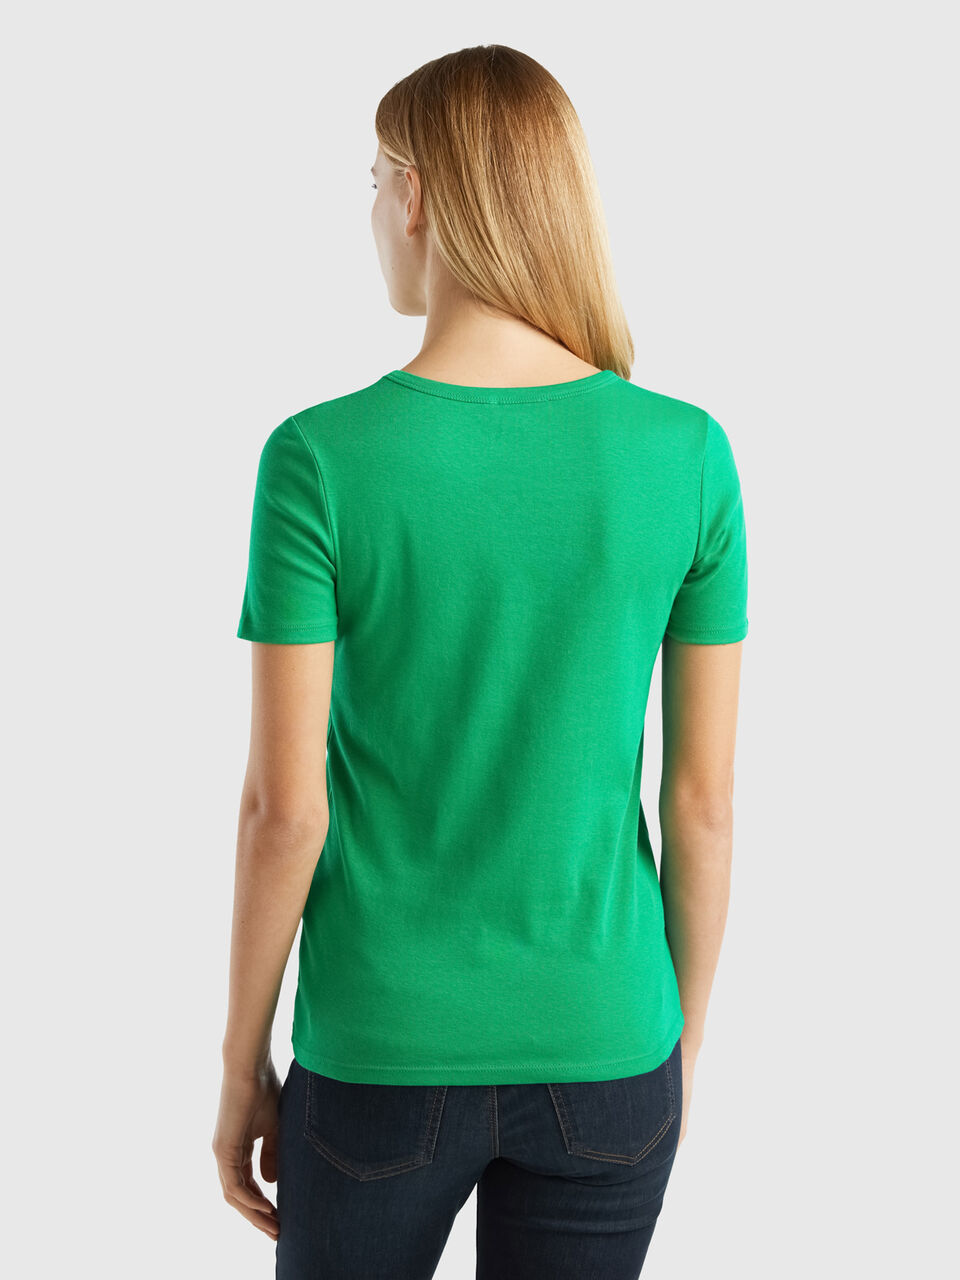 T-shirt in 100% cotton with glitter print logo - Green | Benetton